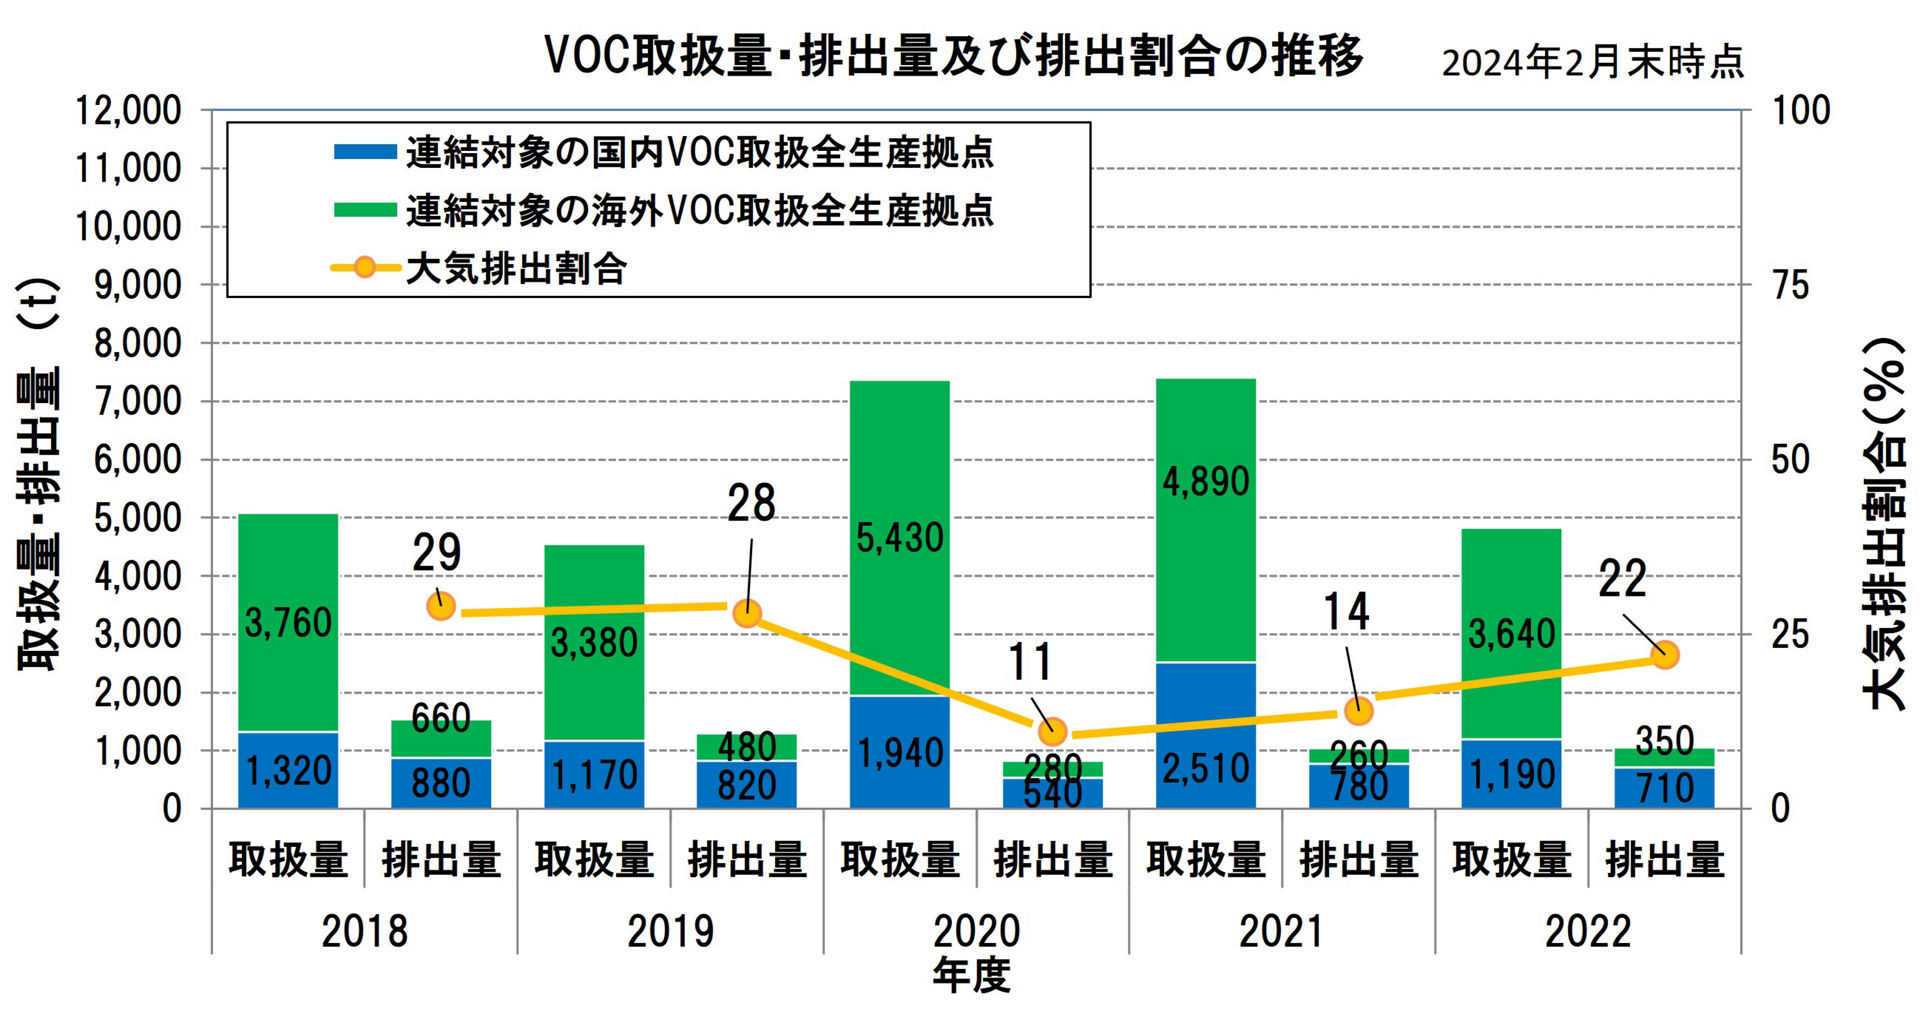 VOC取扱量・排出量及び排出割合の推移